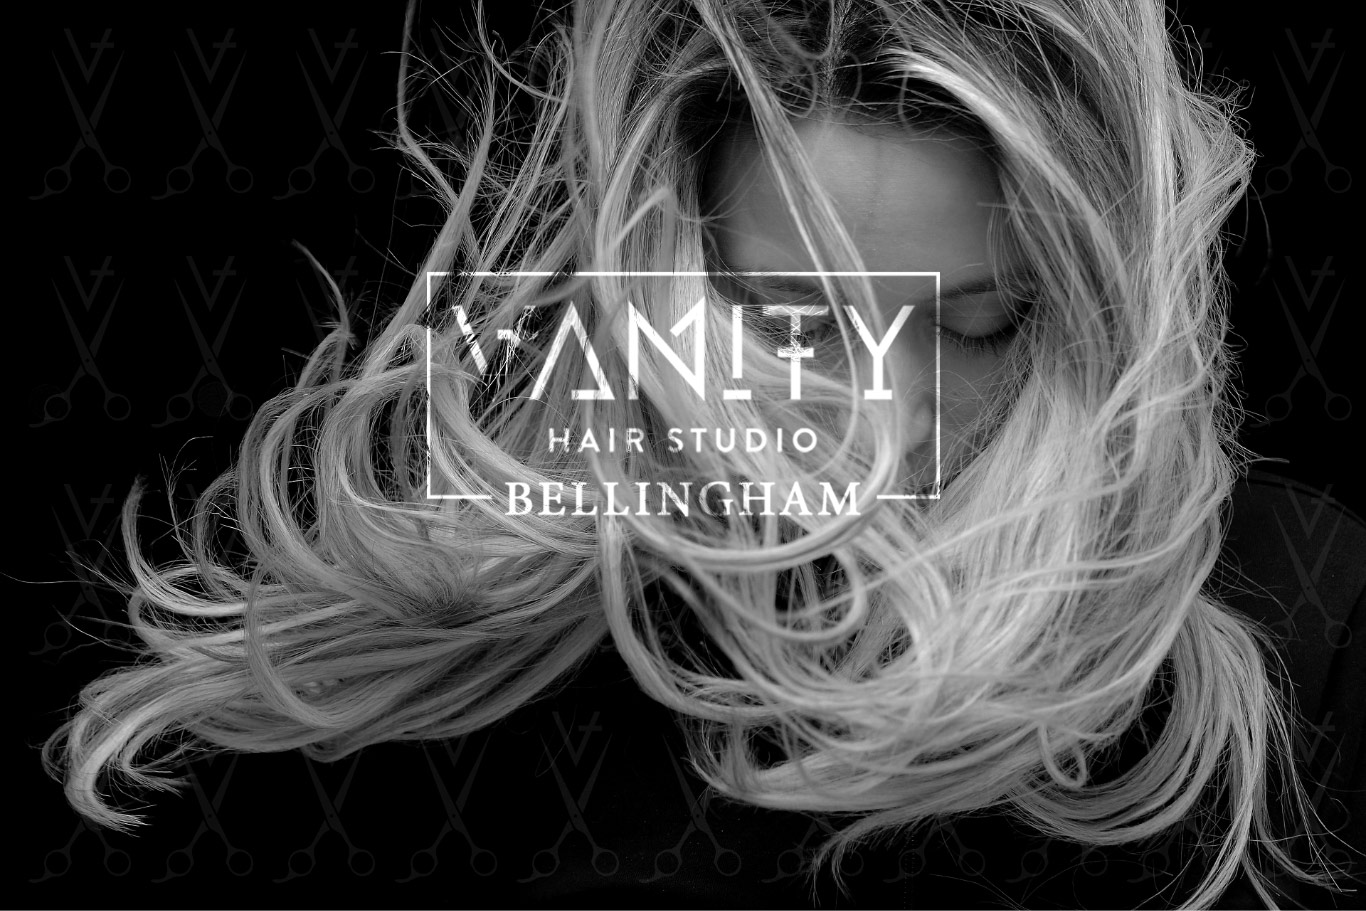 Vanity Hair Studio Bellingham | Hair Salon | Hair Care